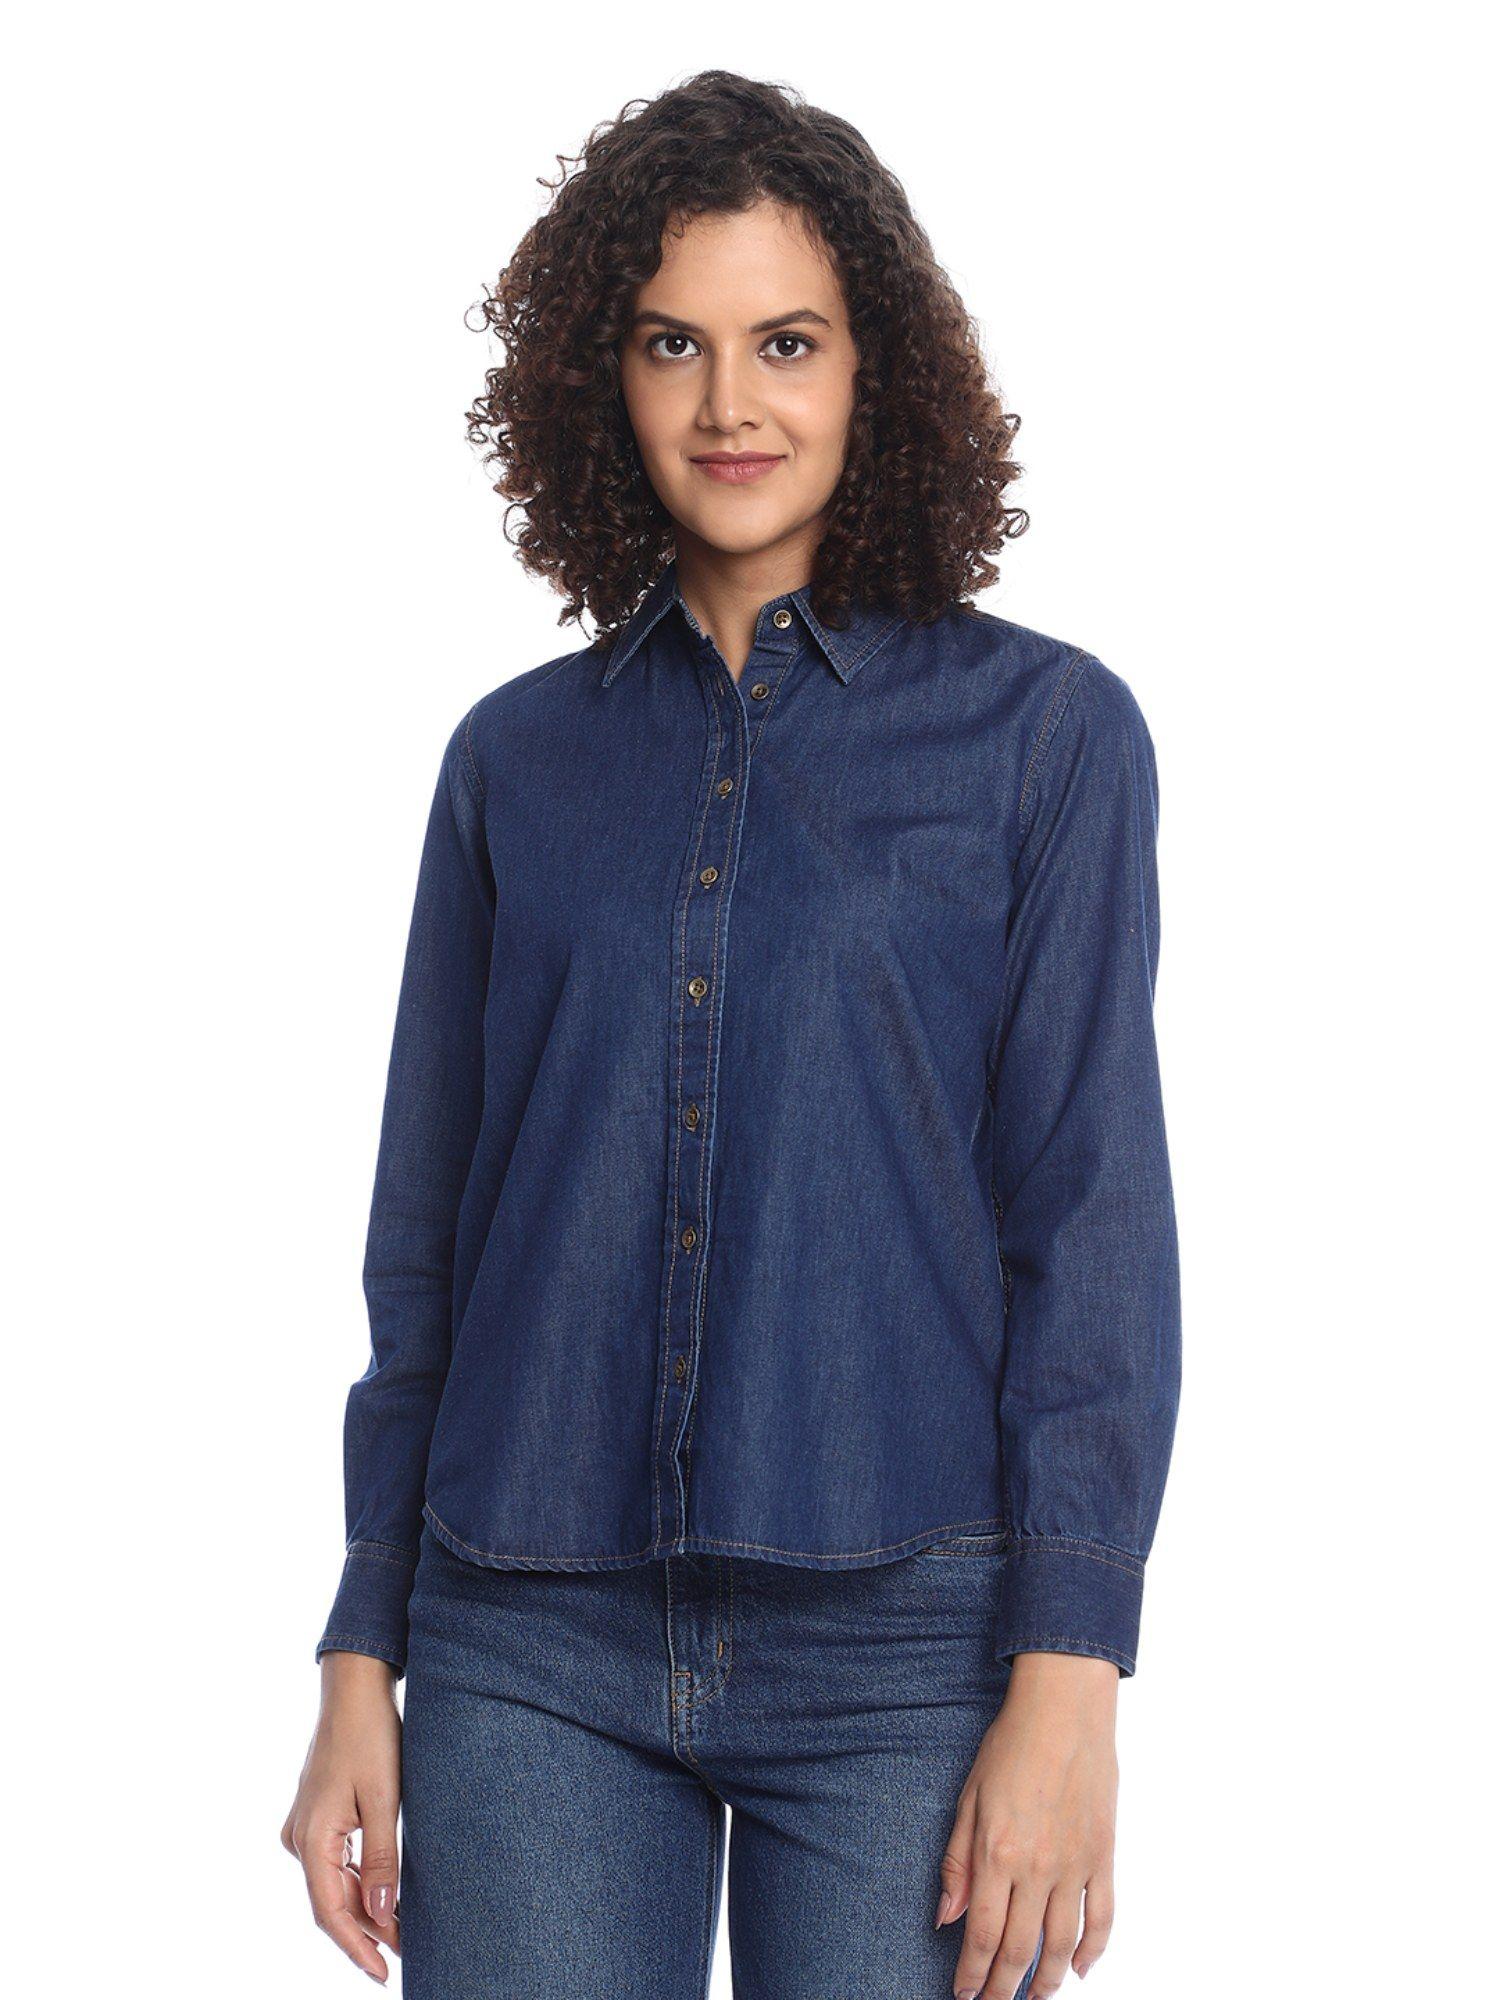 banita indigo color denim drop shoulder shirt for women